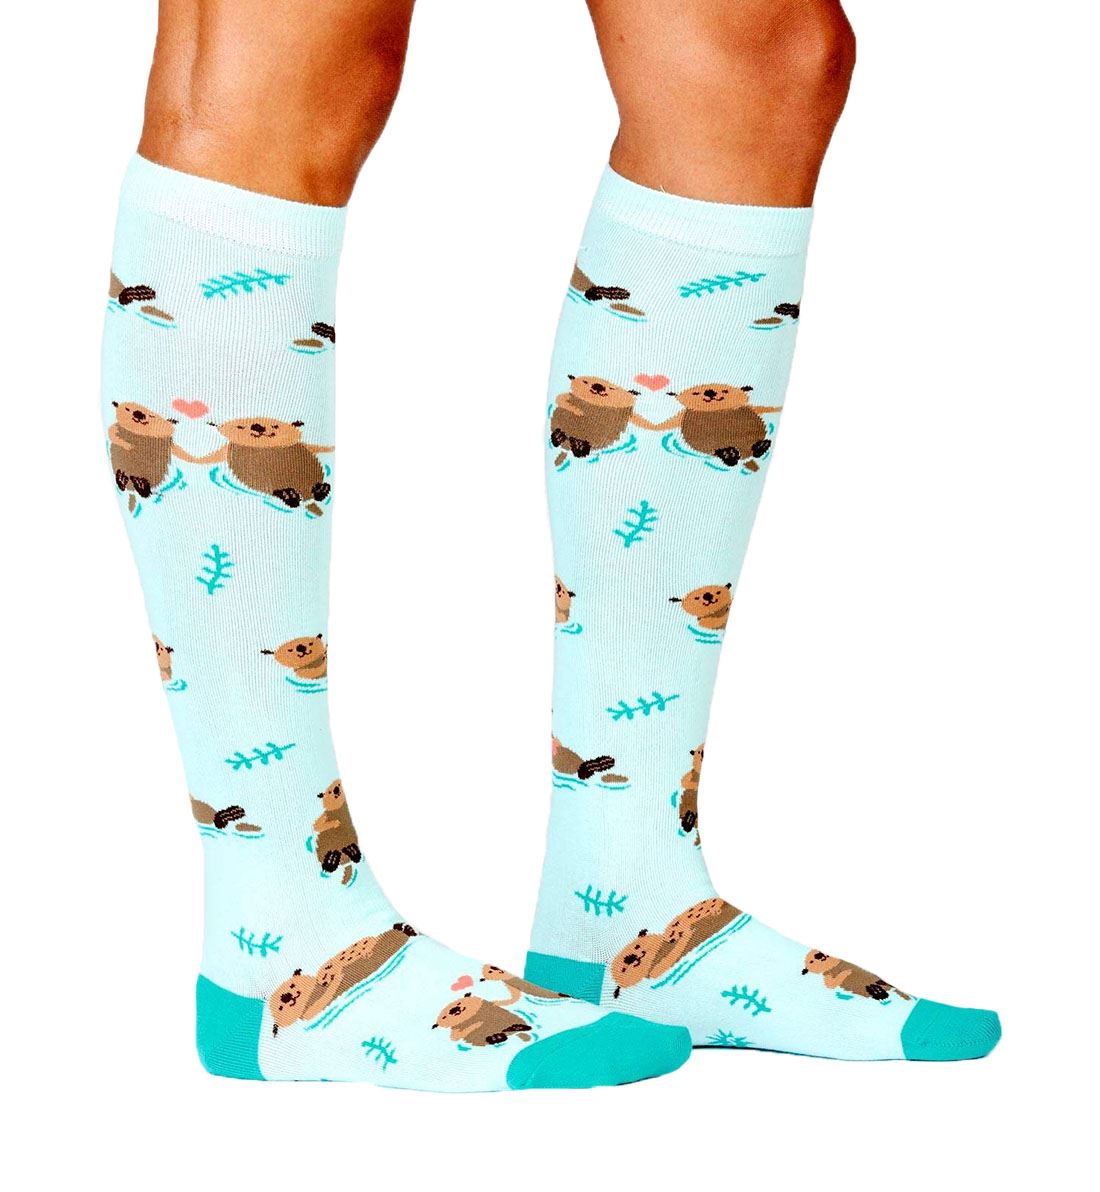 SOCK it to me Unisex Knee High Socks (f0375),My Otter Half - My Otter Half,One Size